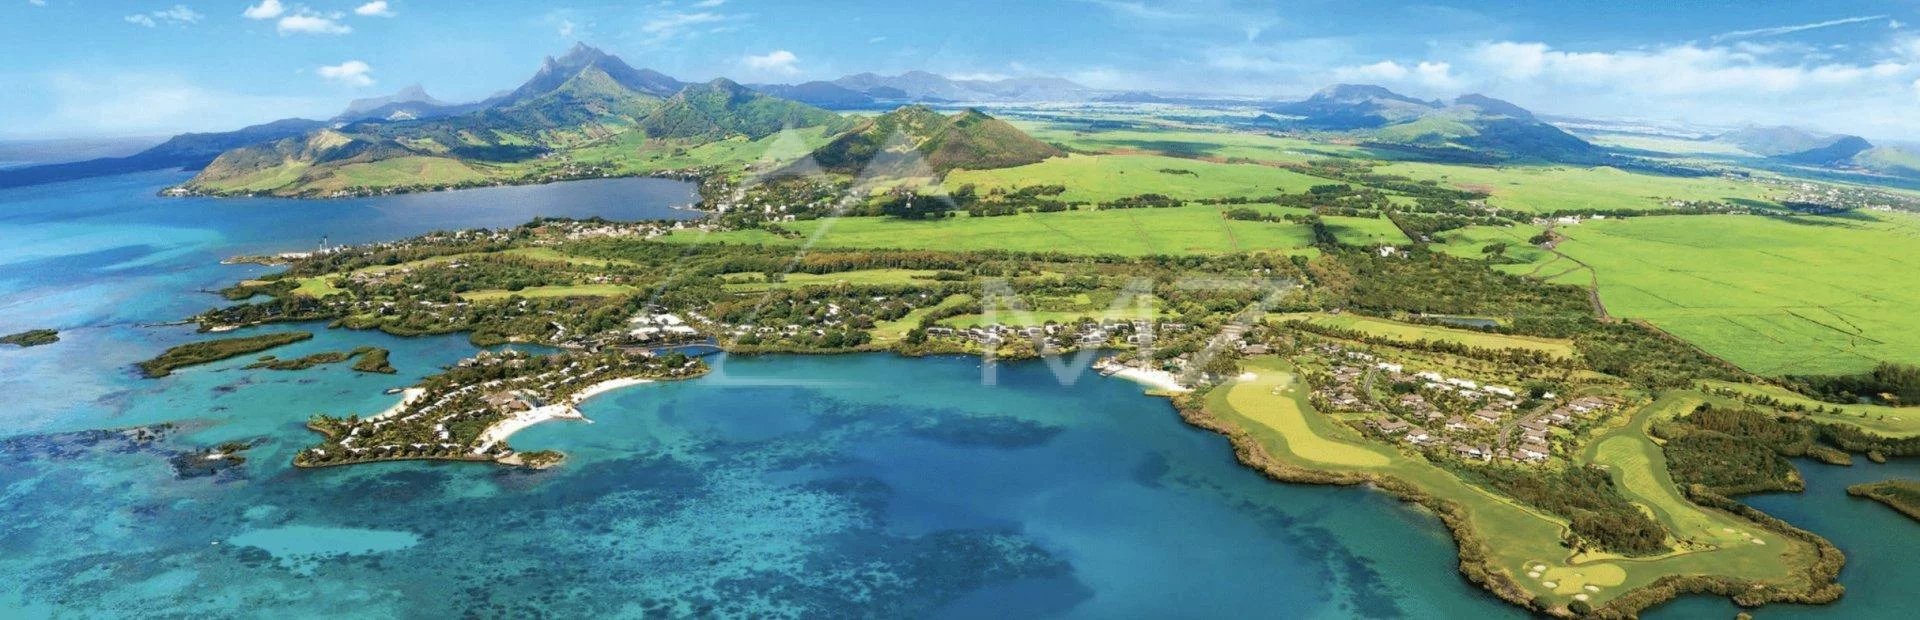 Mauritius - der Adamante Distrikt - Meerblick